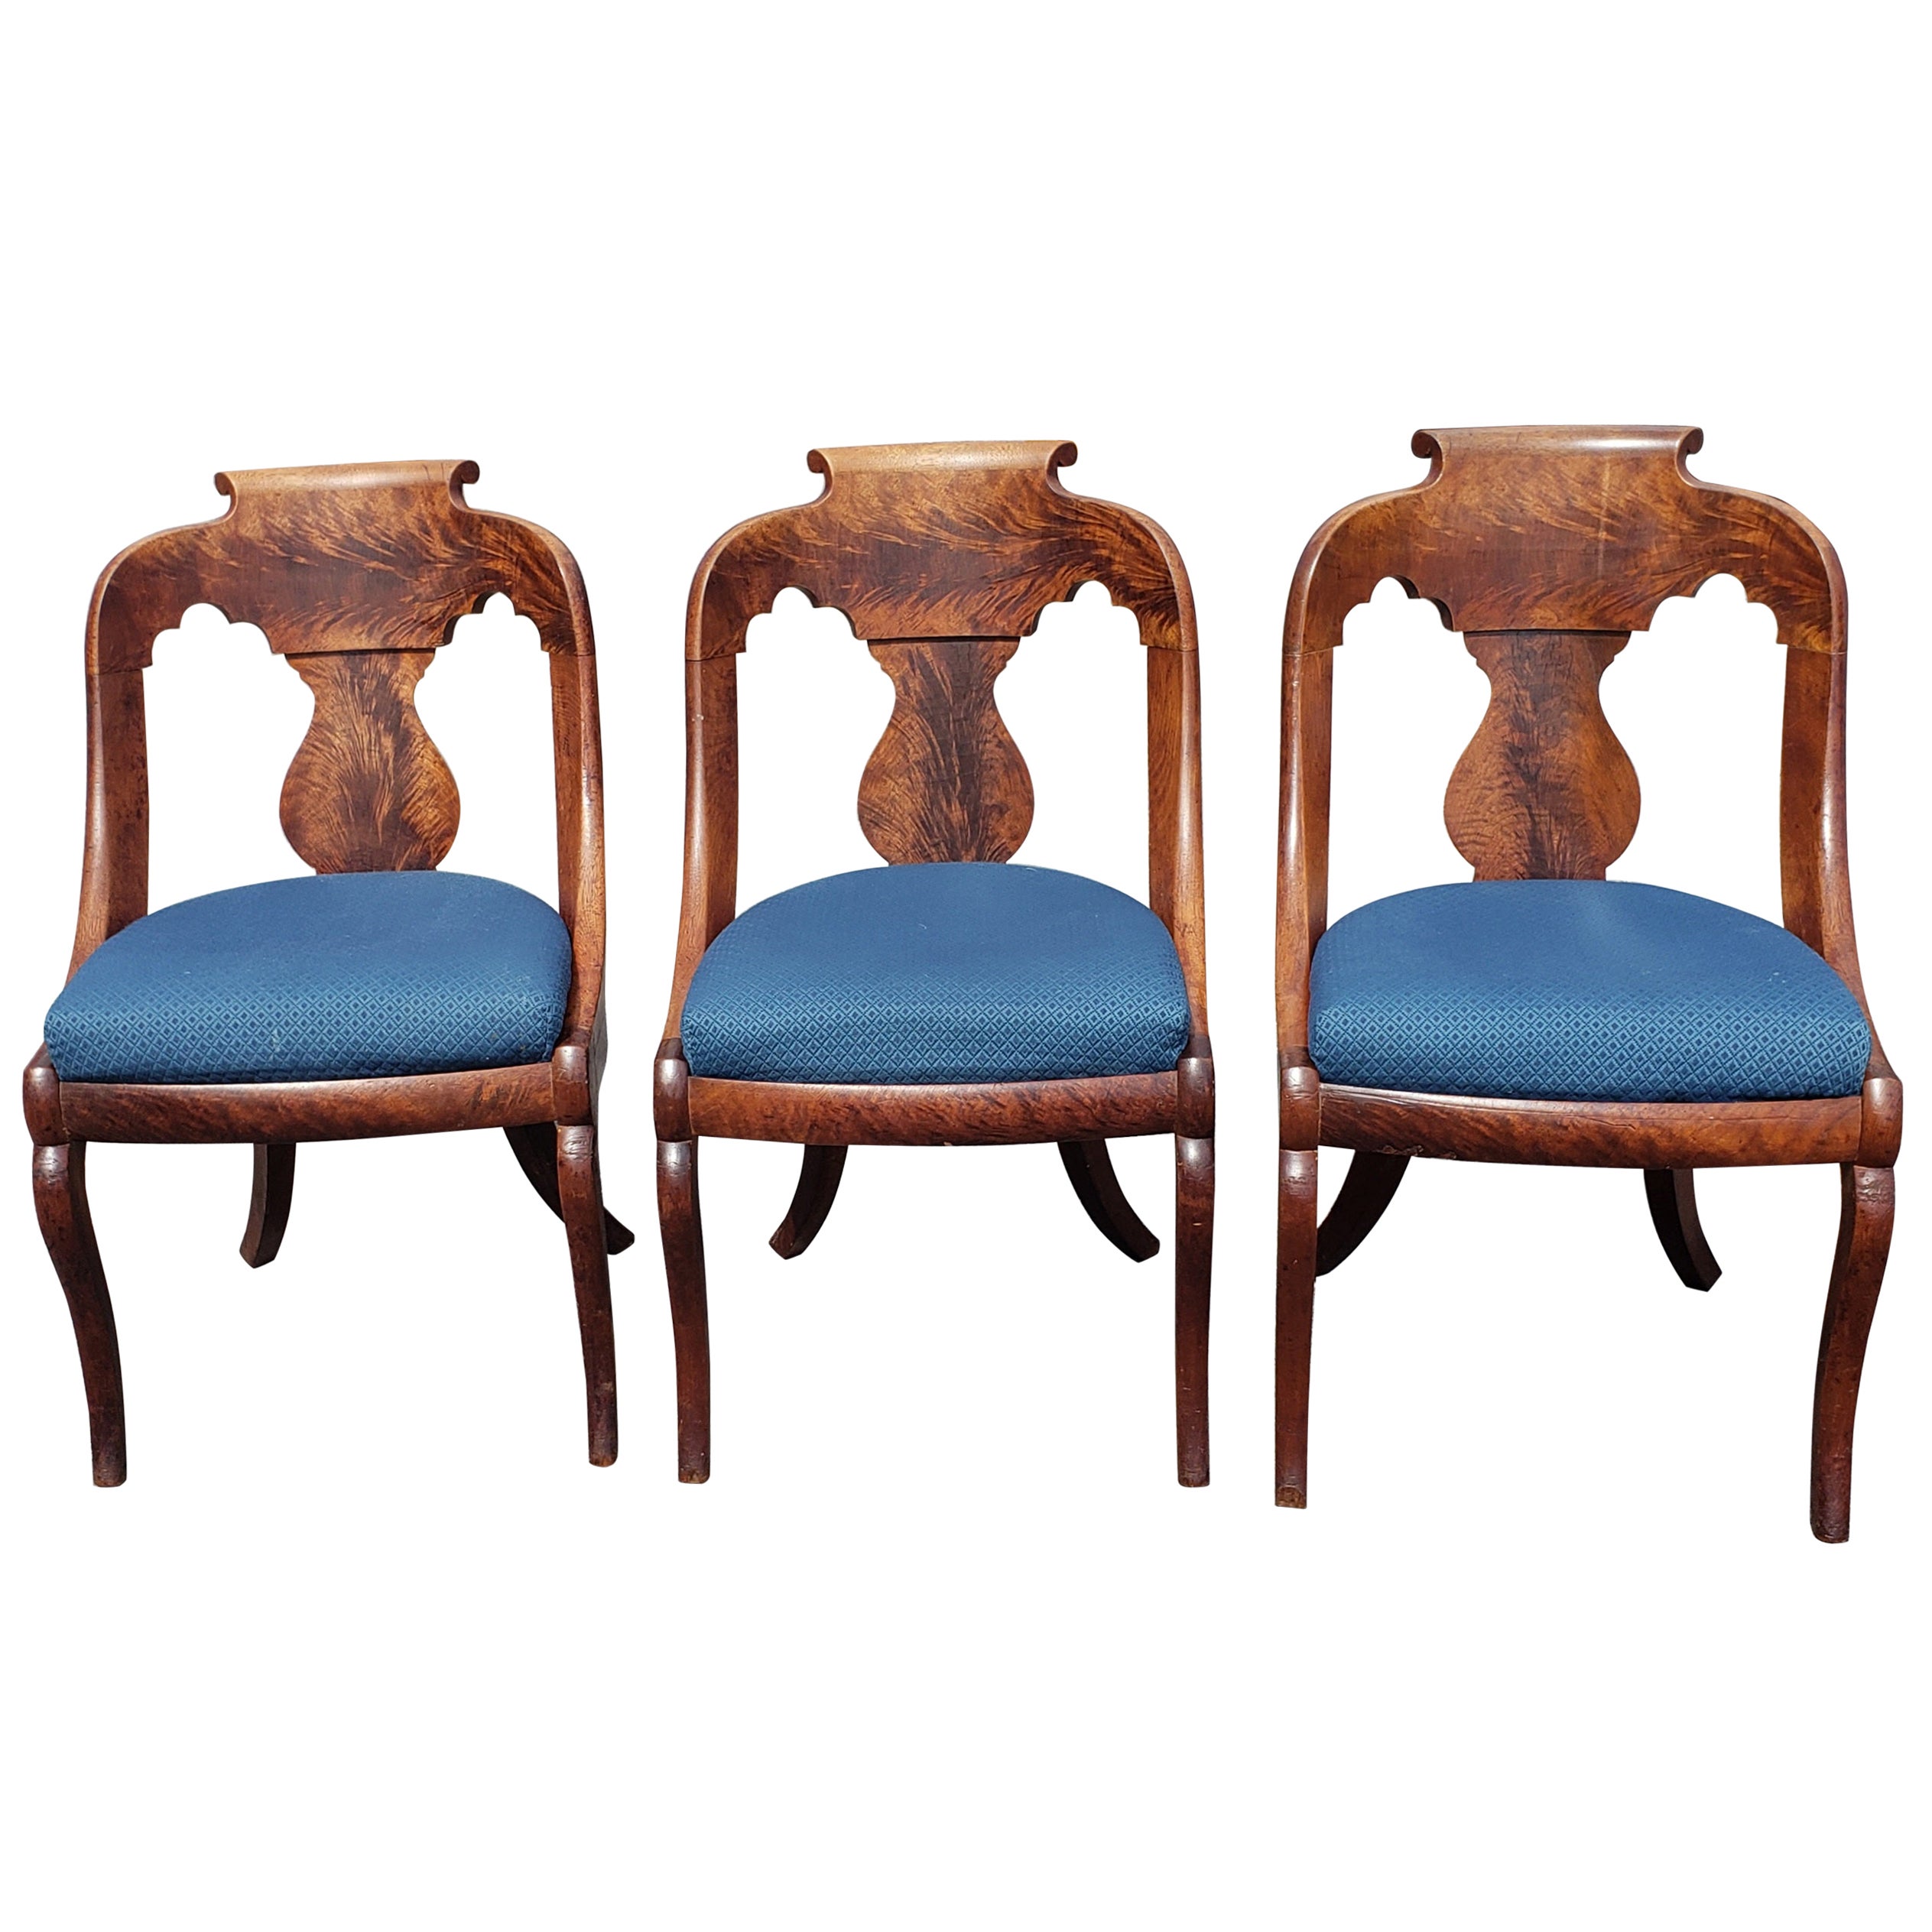 American Empire Boston Mahogany Grandview Chairs, C 1860s Set of 3 For Sale